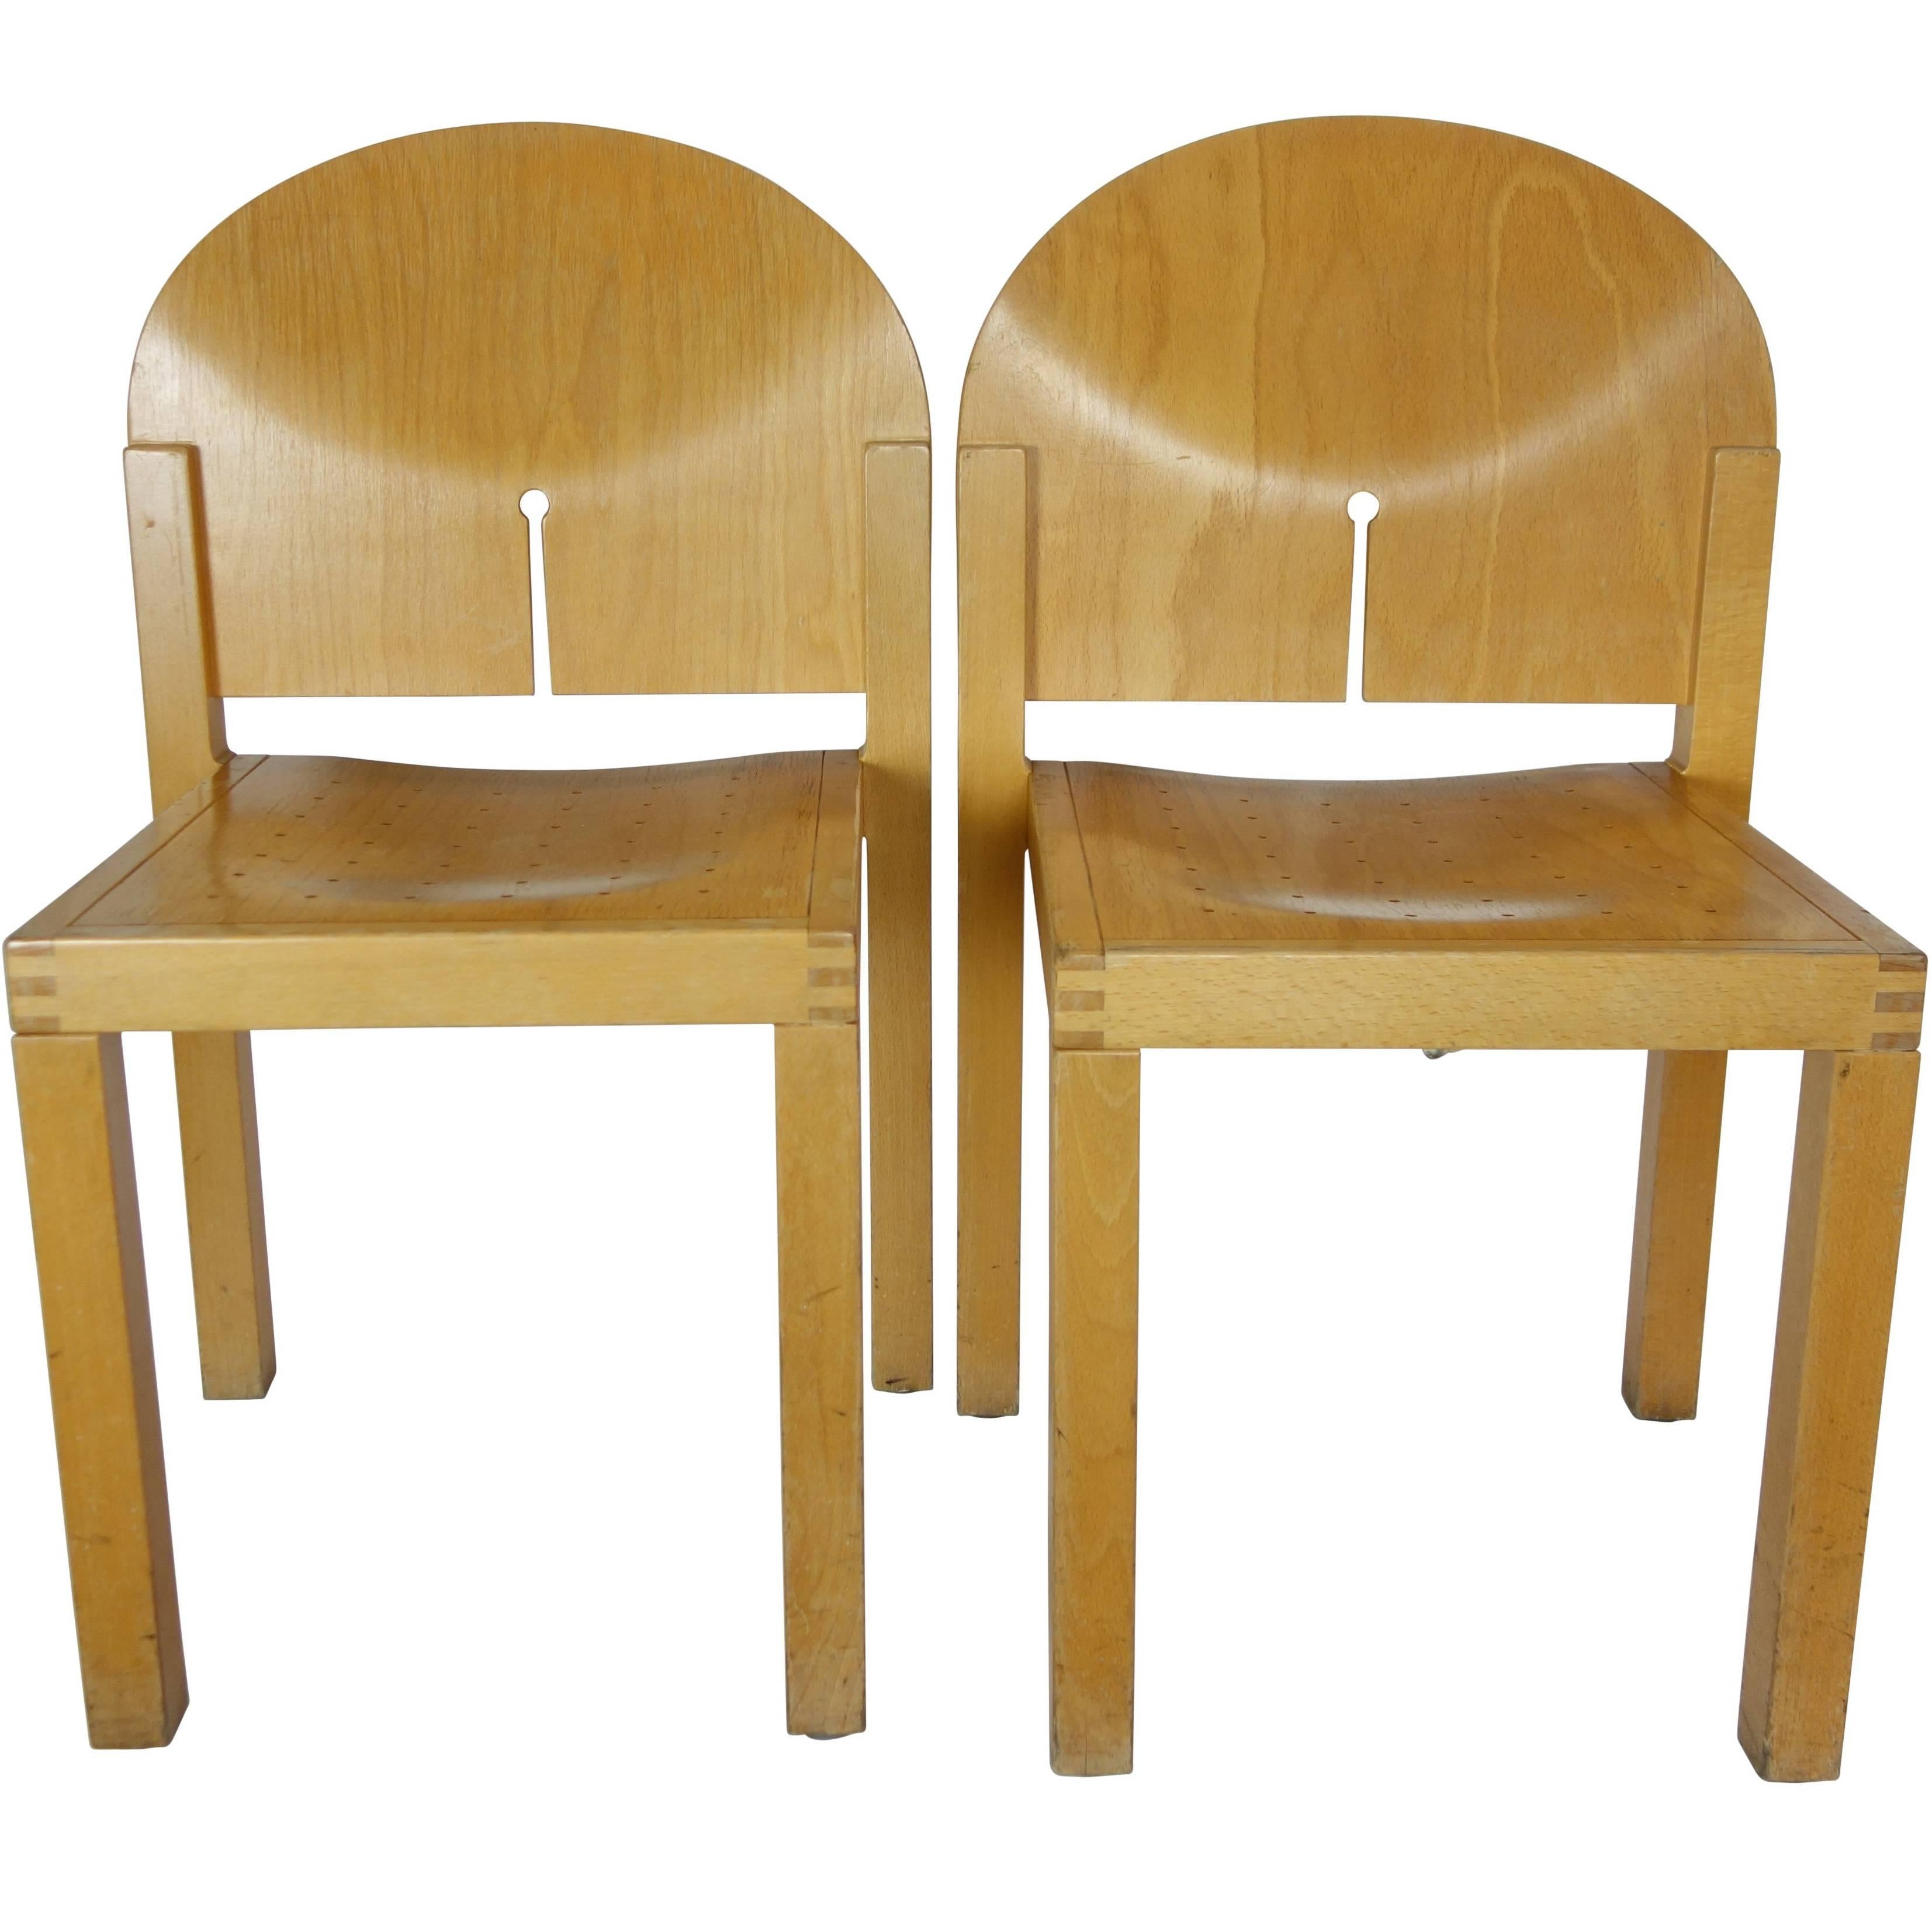 Pair of Birch Eclipse Chairs by Brayton International